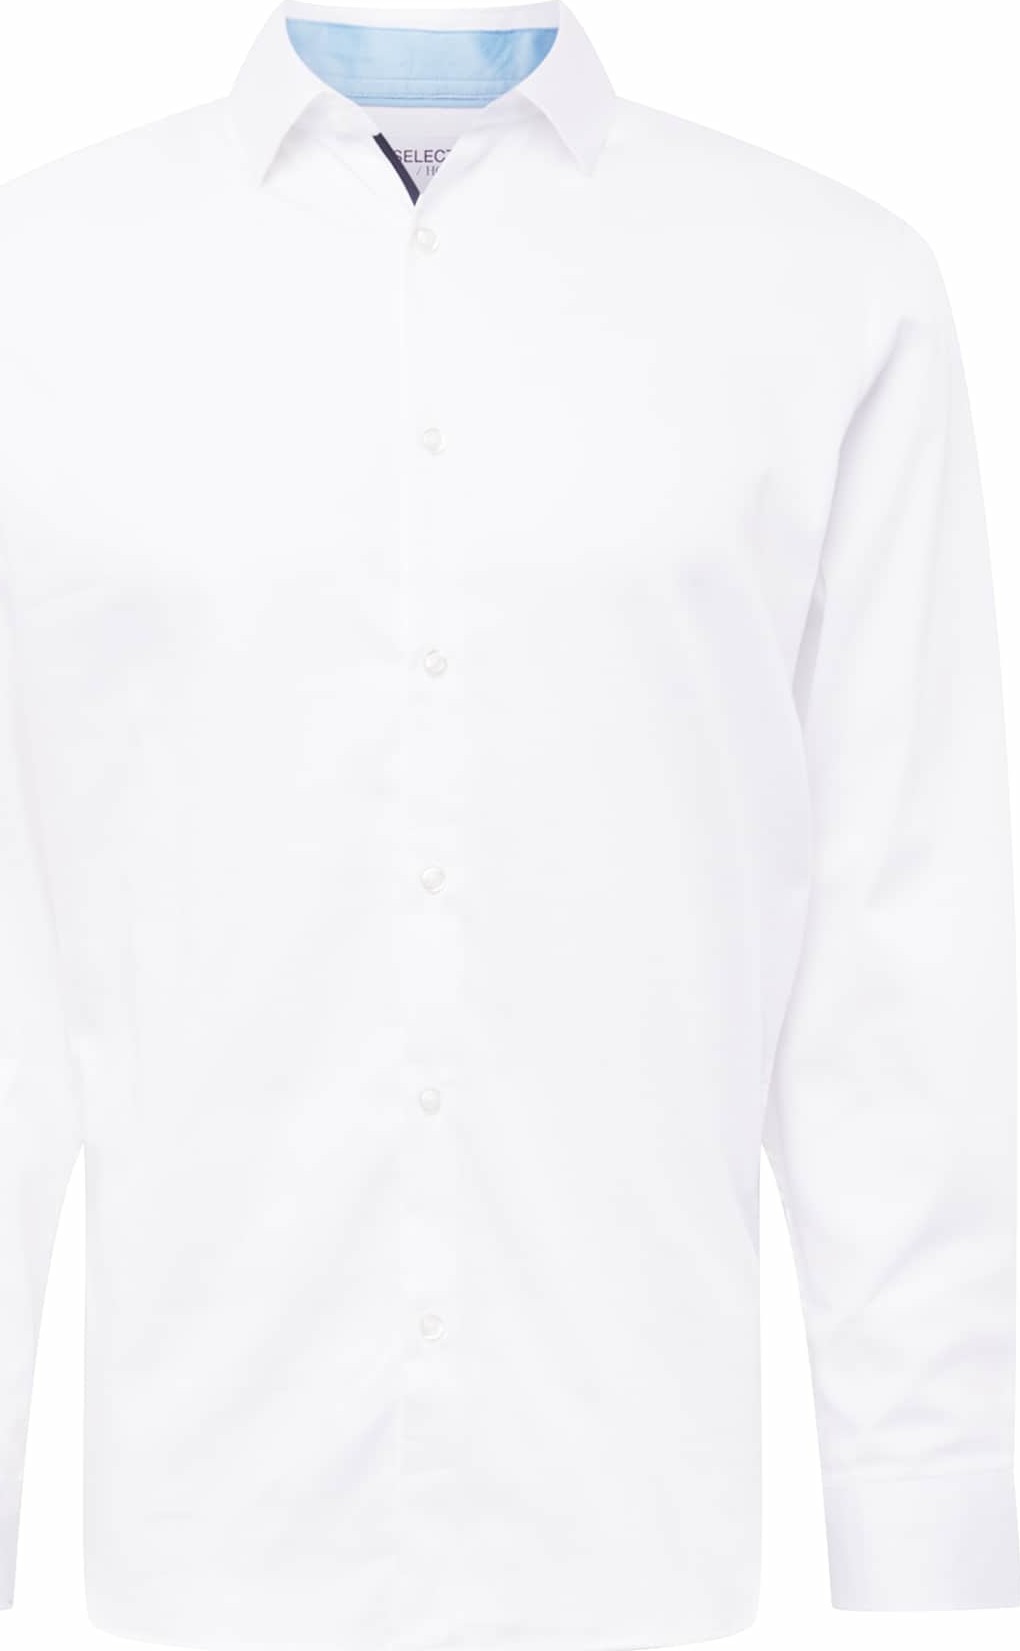 SELECTED HOMME Košile bílá